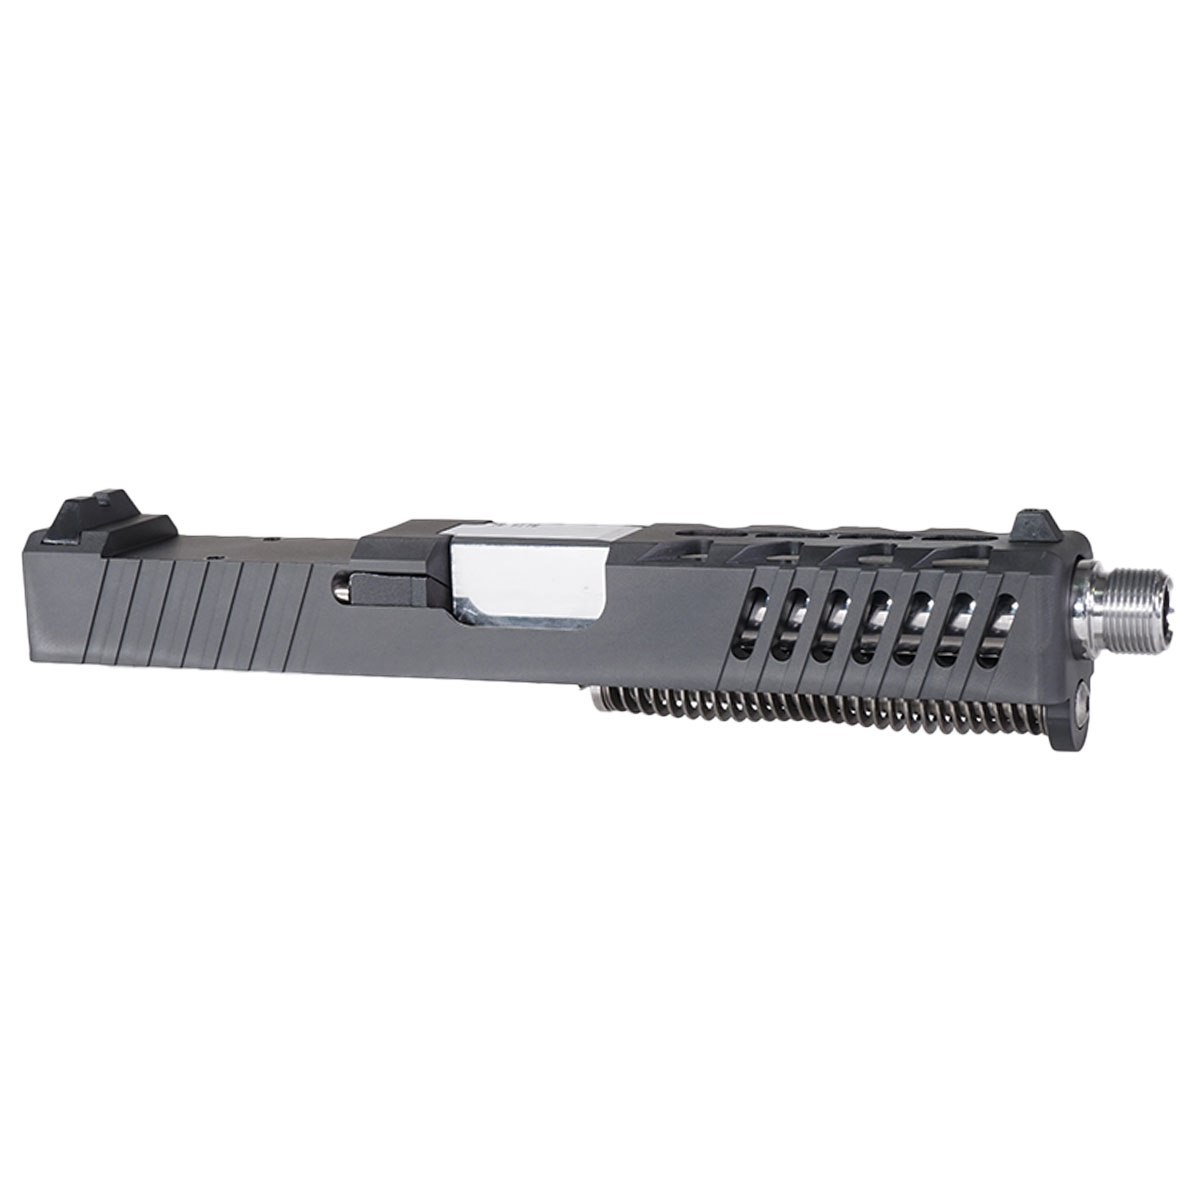 DTT 'Strikebreaker' 9mm Complete Slide Kit - Glock 19 Gen 1-3 Compatible